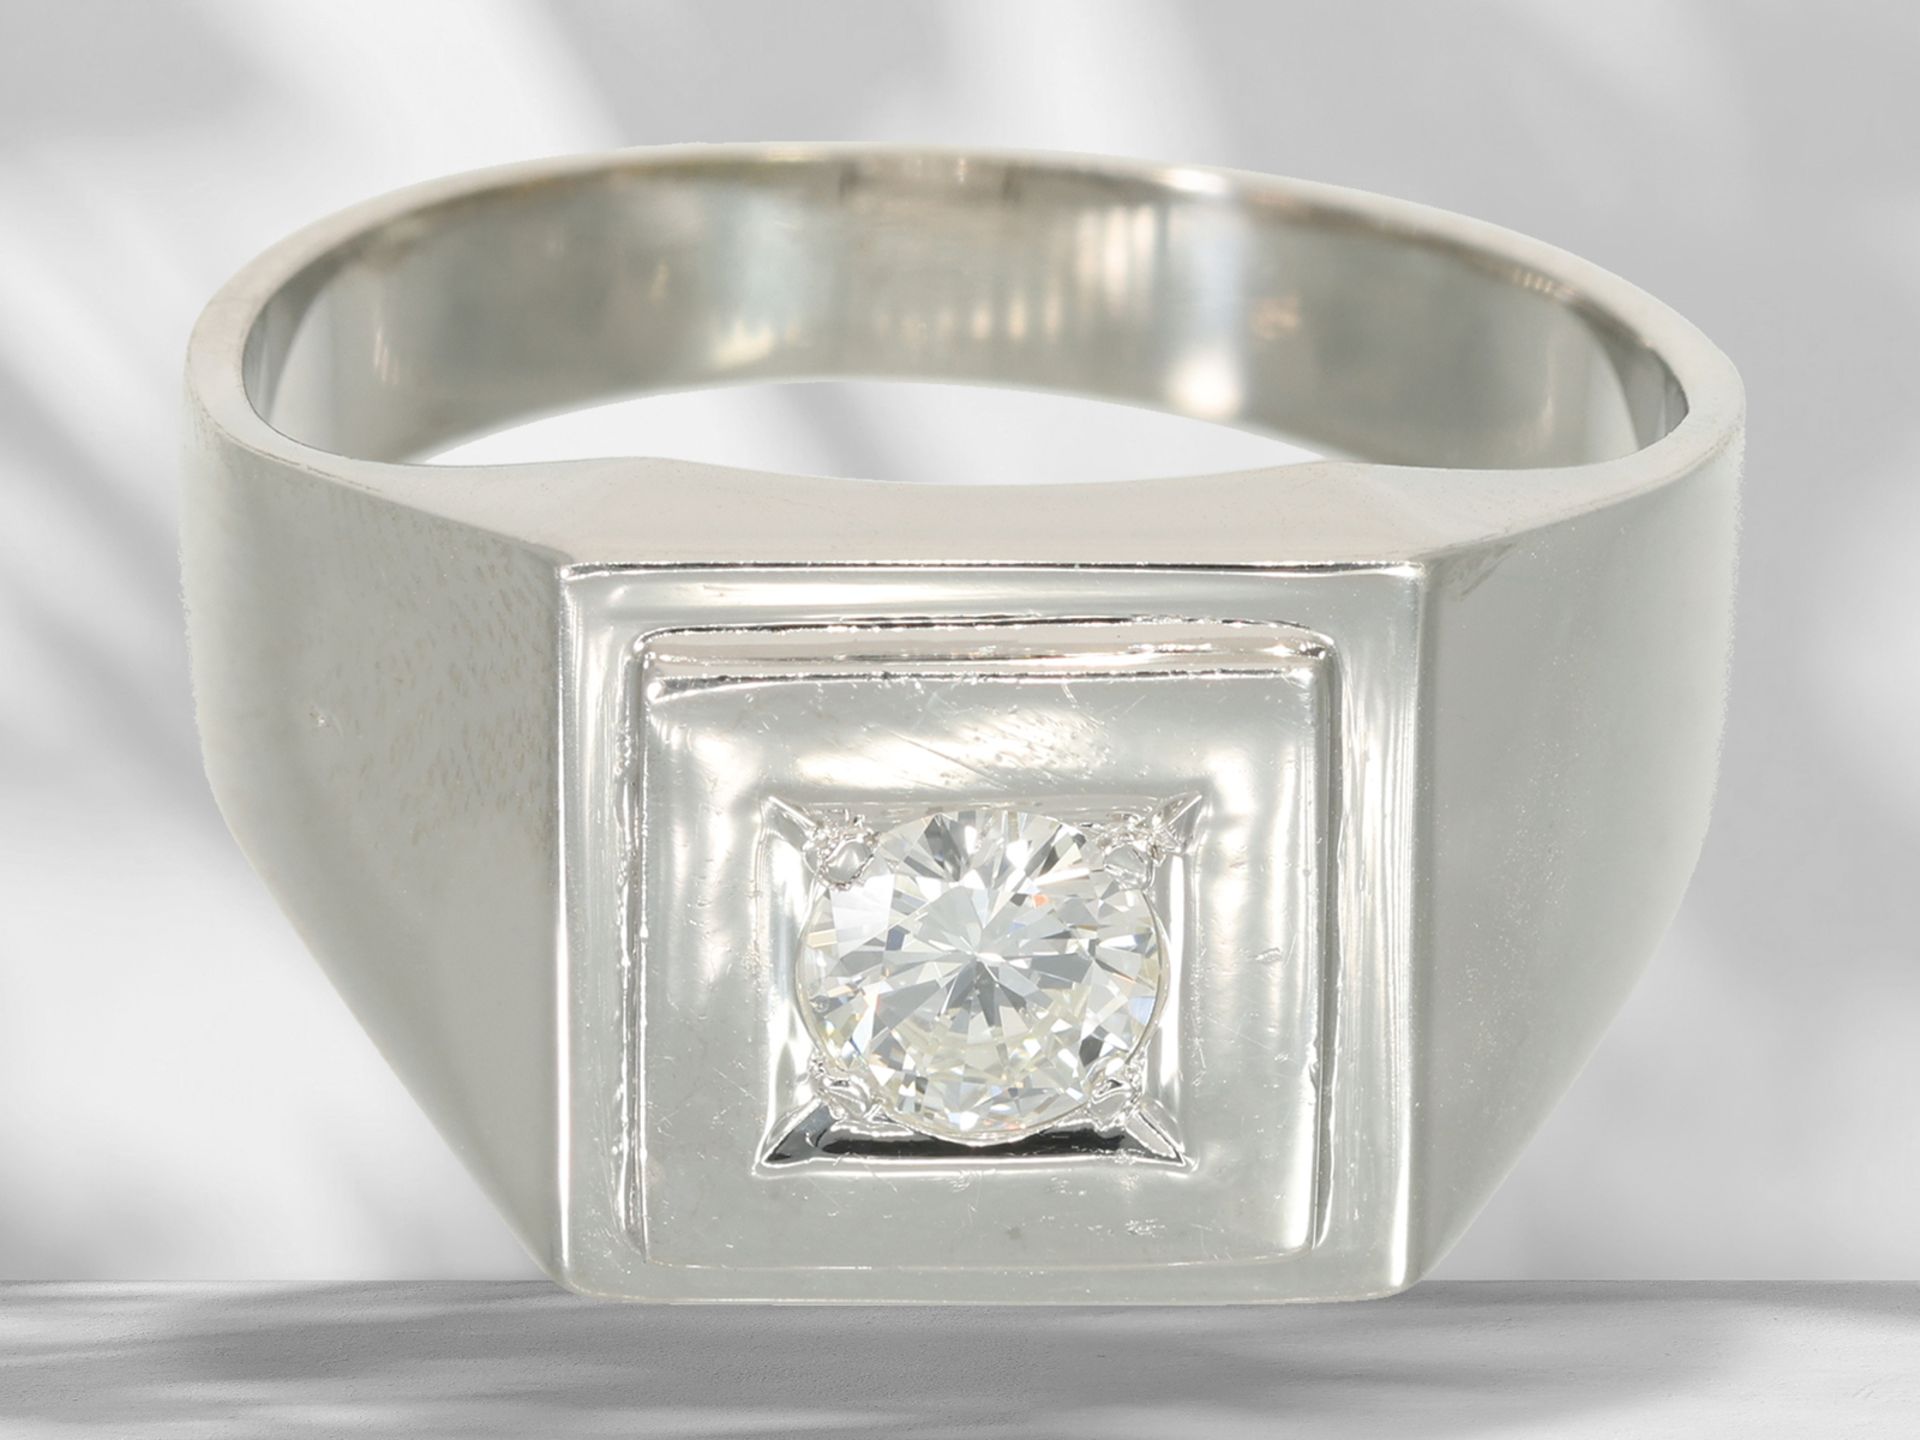 White gold vintage solitaire brilliant-cut diamond gold ring, brilliant-cut diamond of approx. 0.45c - Image 2 of 4